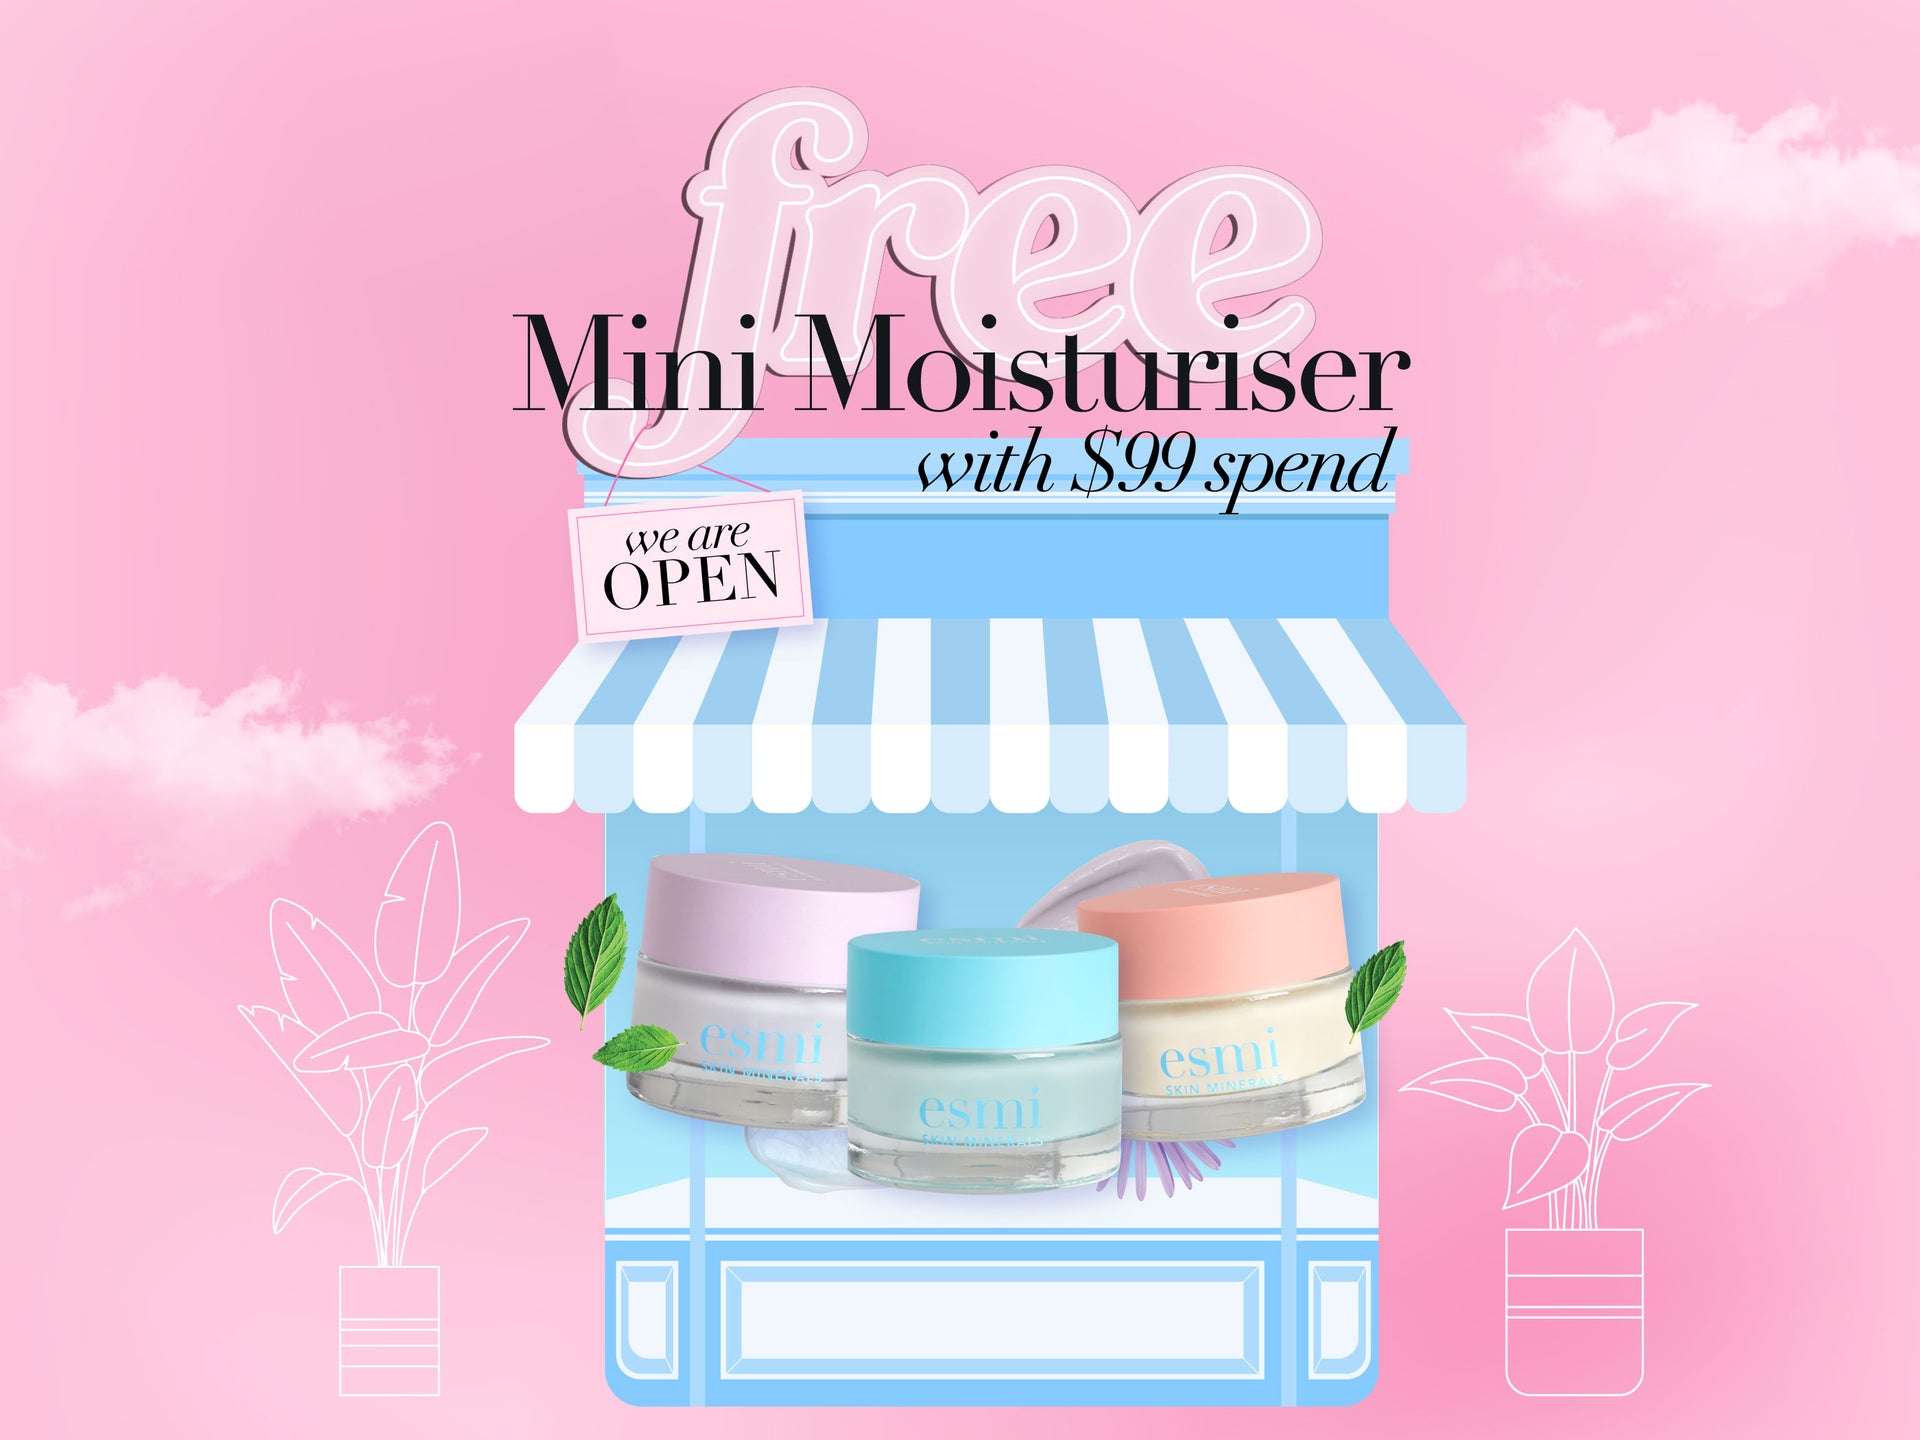 Free Mini Moisturiser with $99 spend